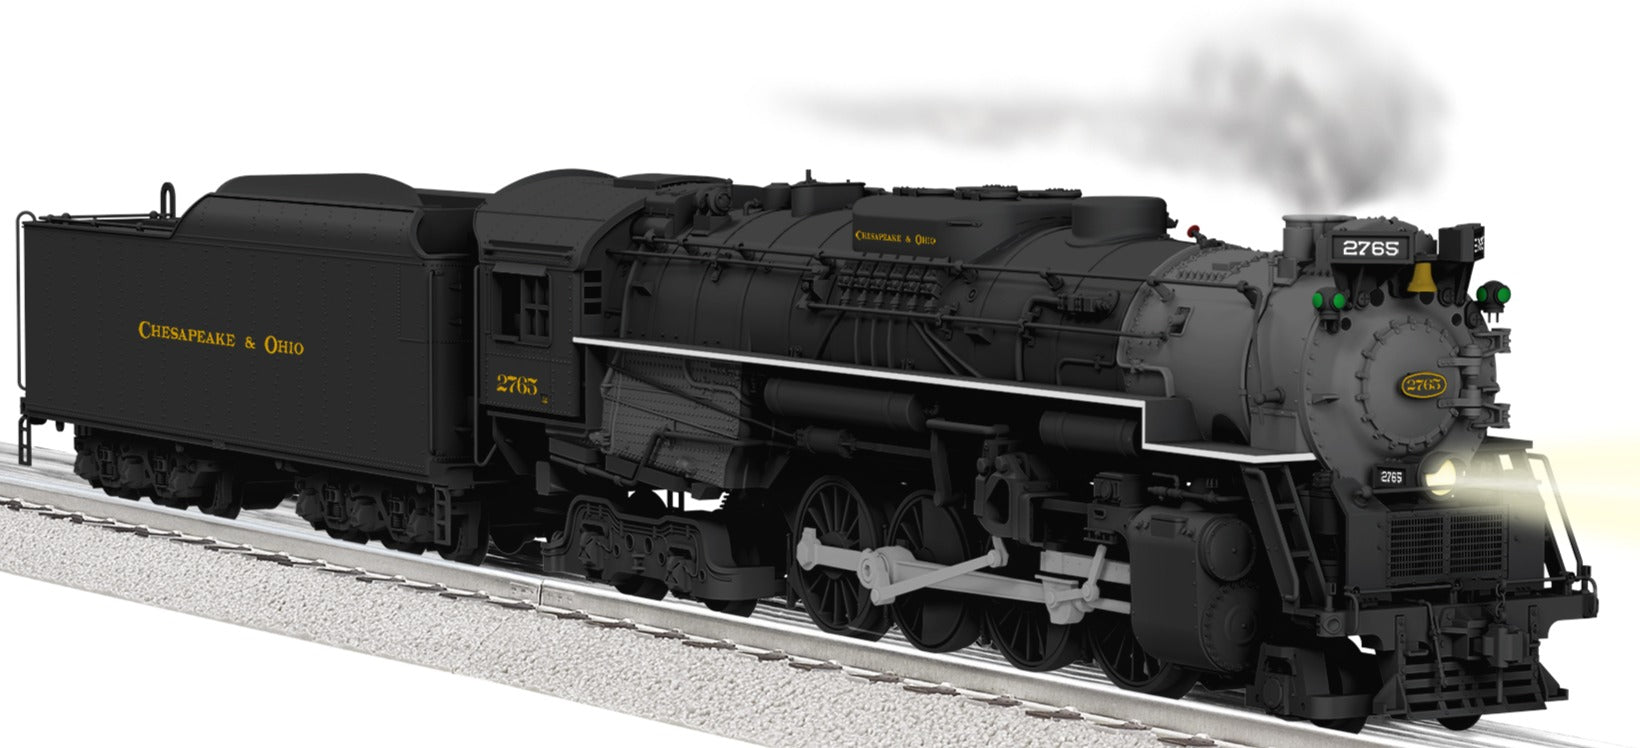 Lionel 2431520 - Legacy Berkshire Steam Locomotive "Chesapeake & Ohio" #2765